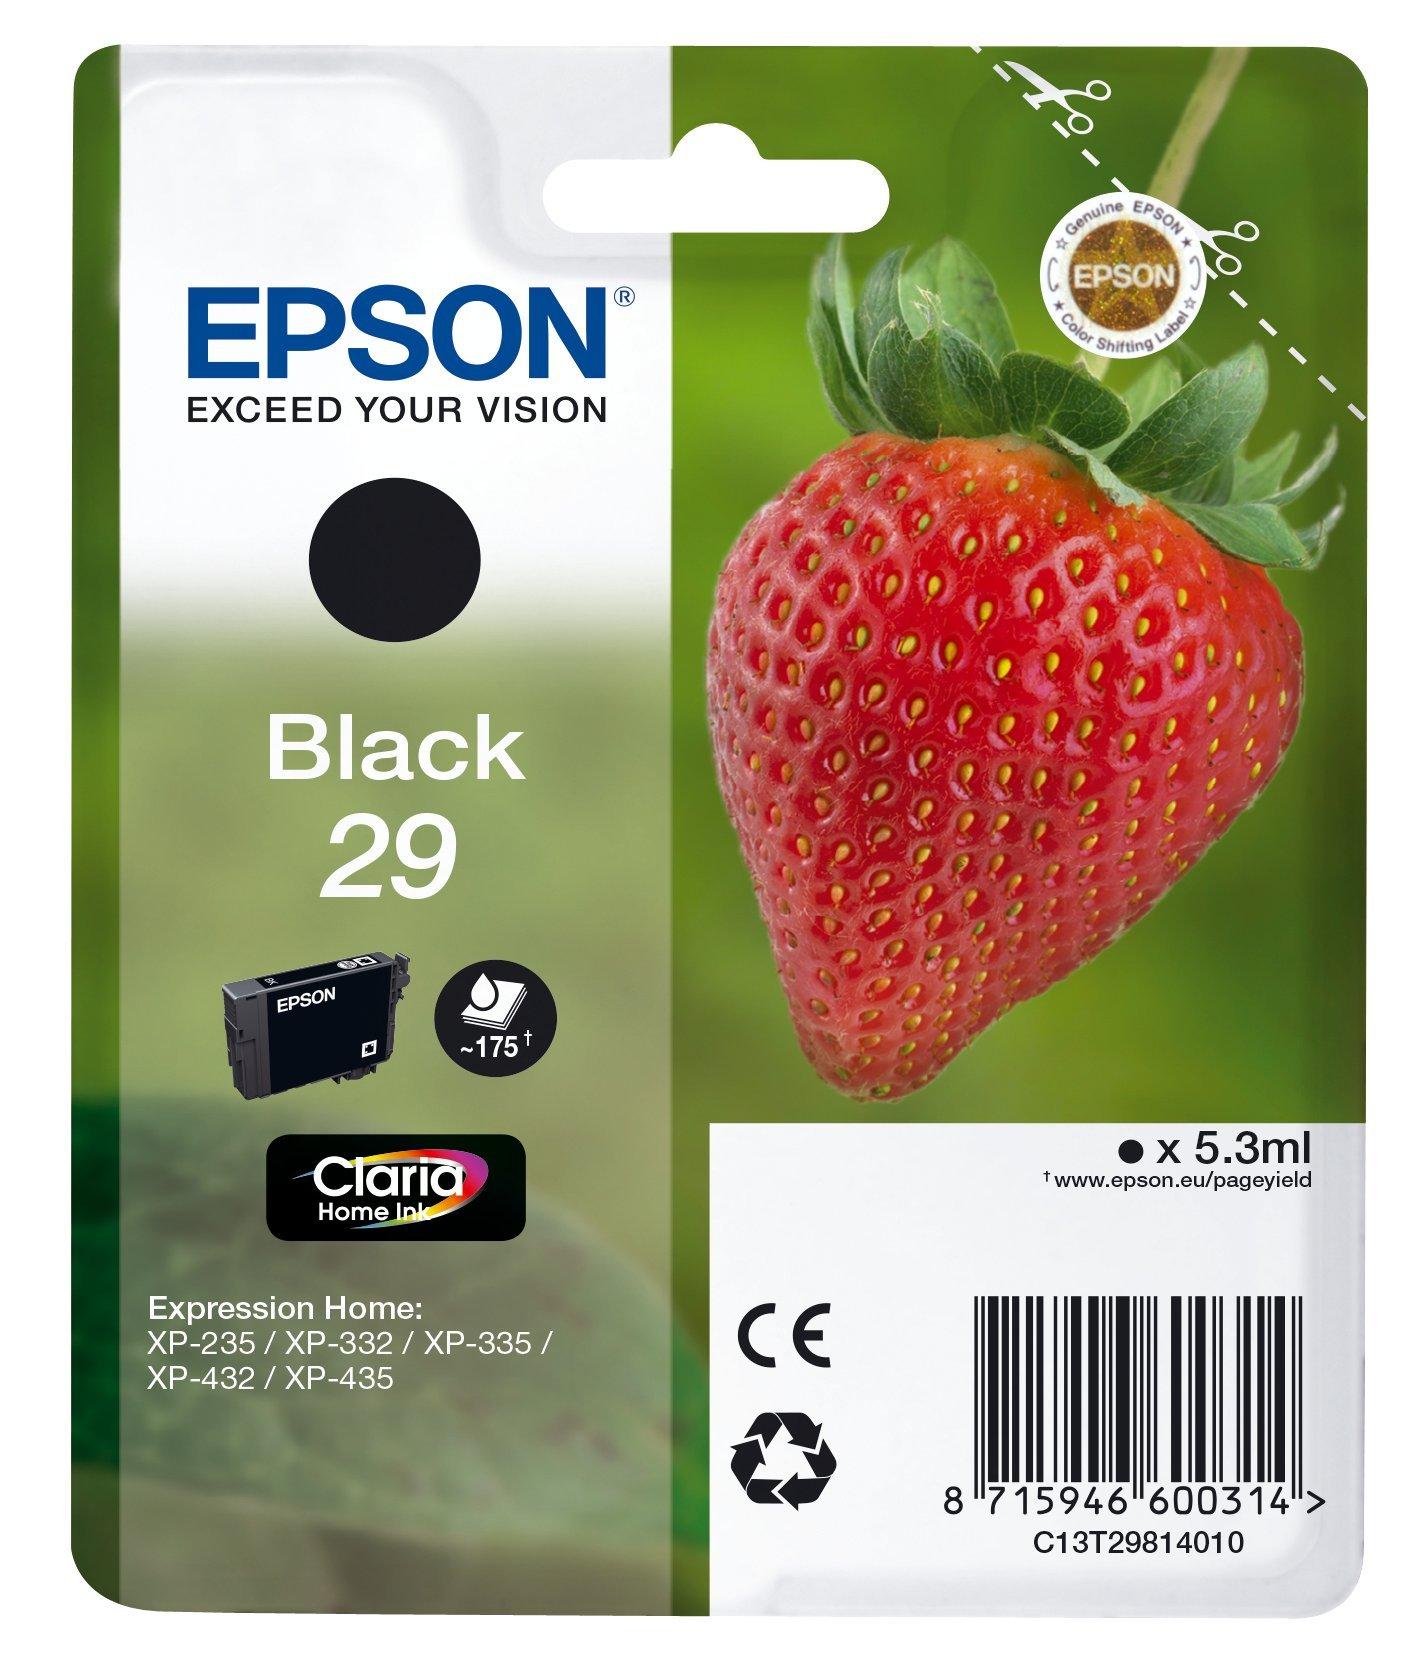 Epson Expression Home XP-245 - Imprimante multifonction - Garantie